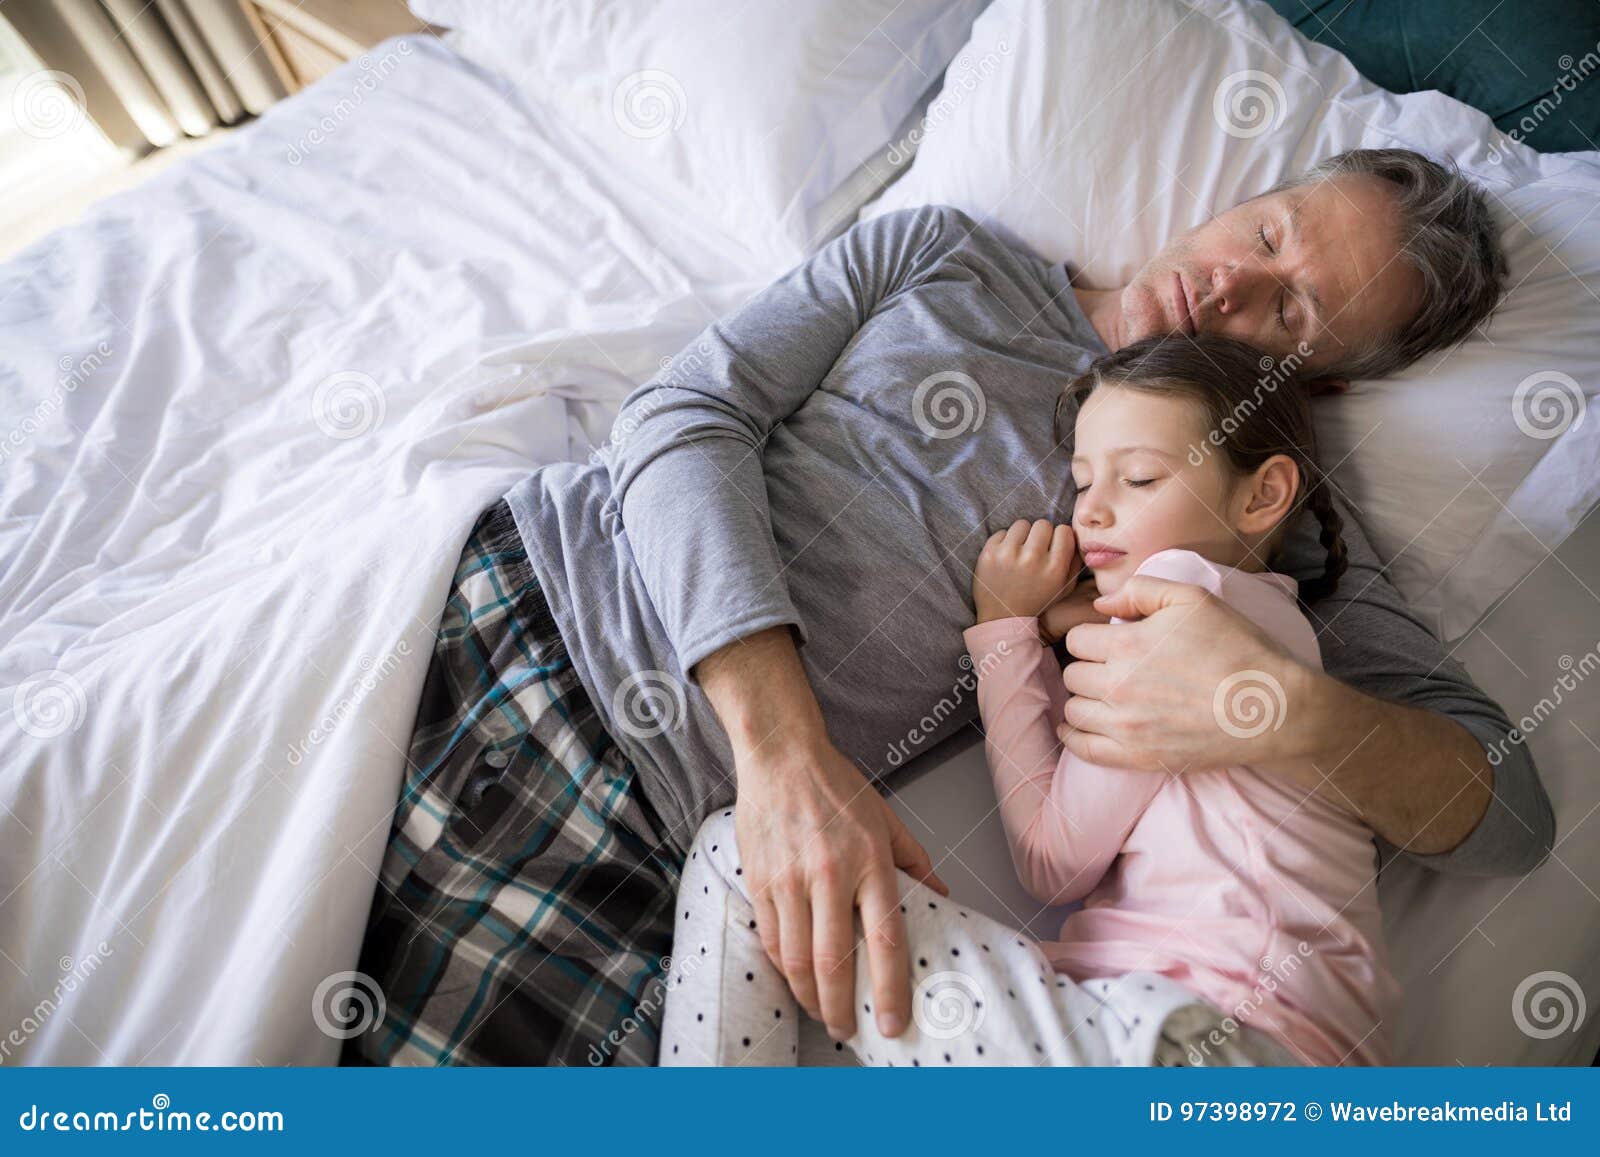 aida khosravi add dad and daughter sleeping photo